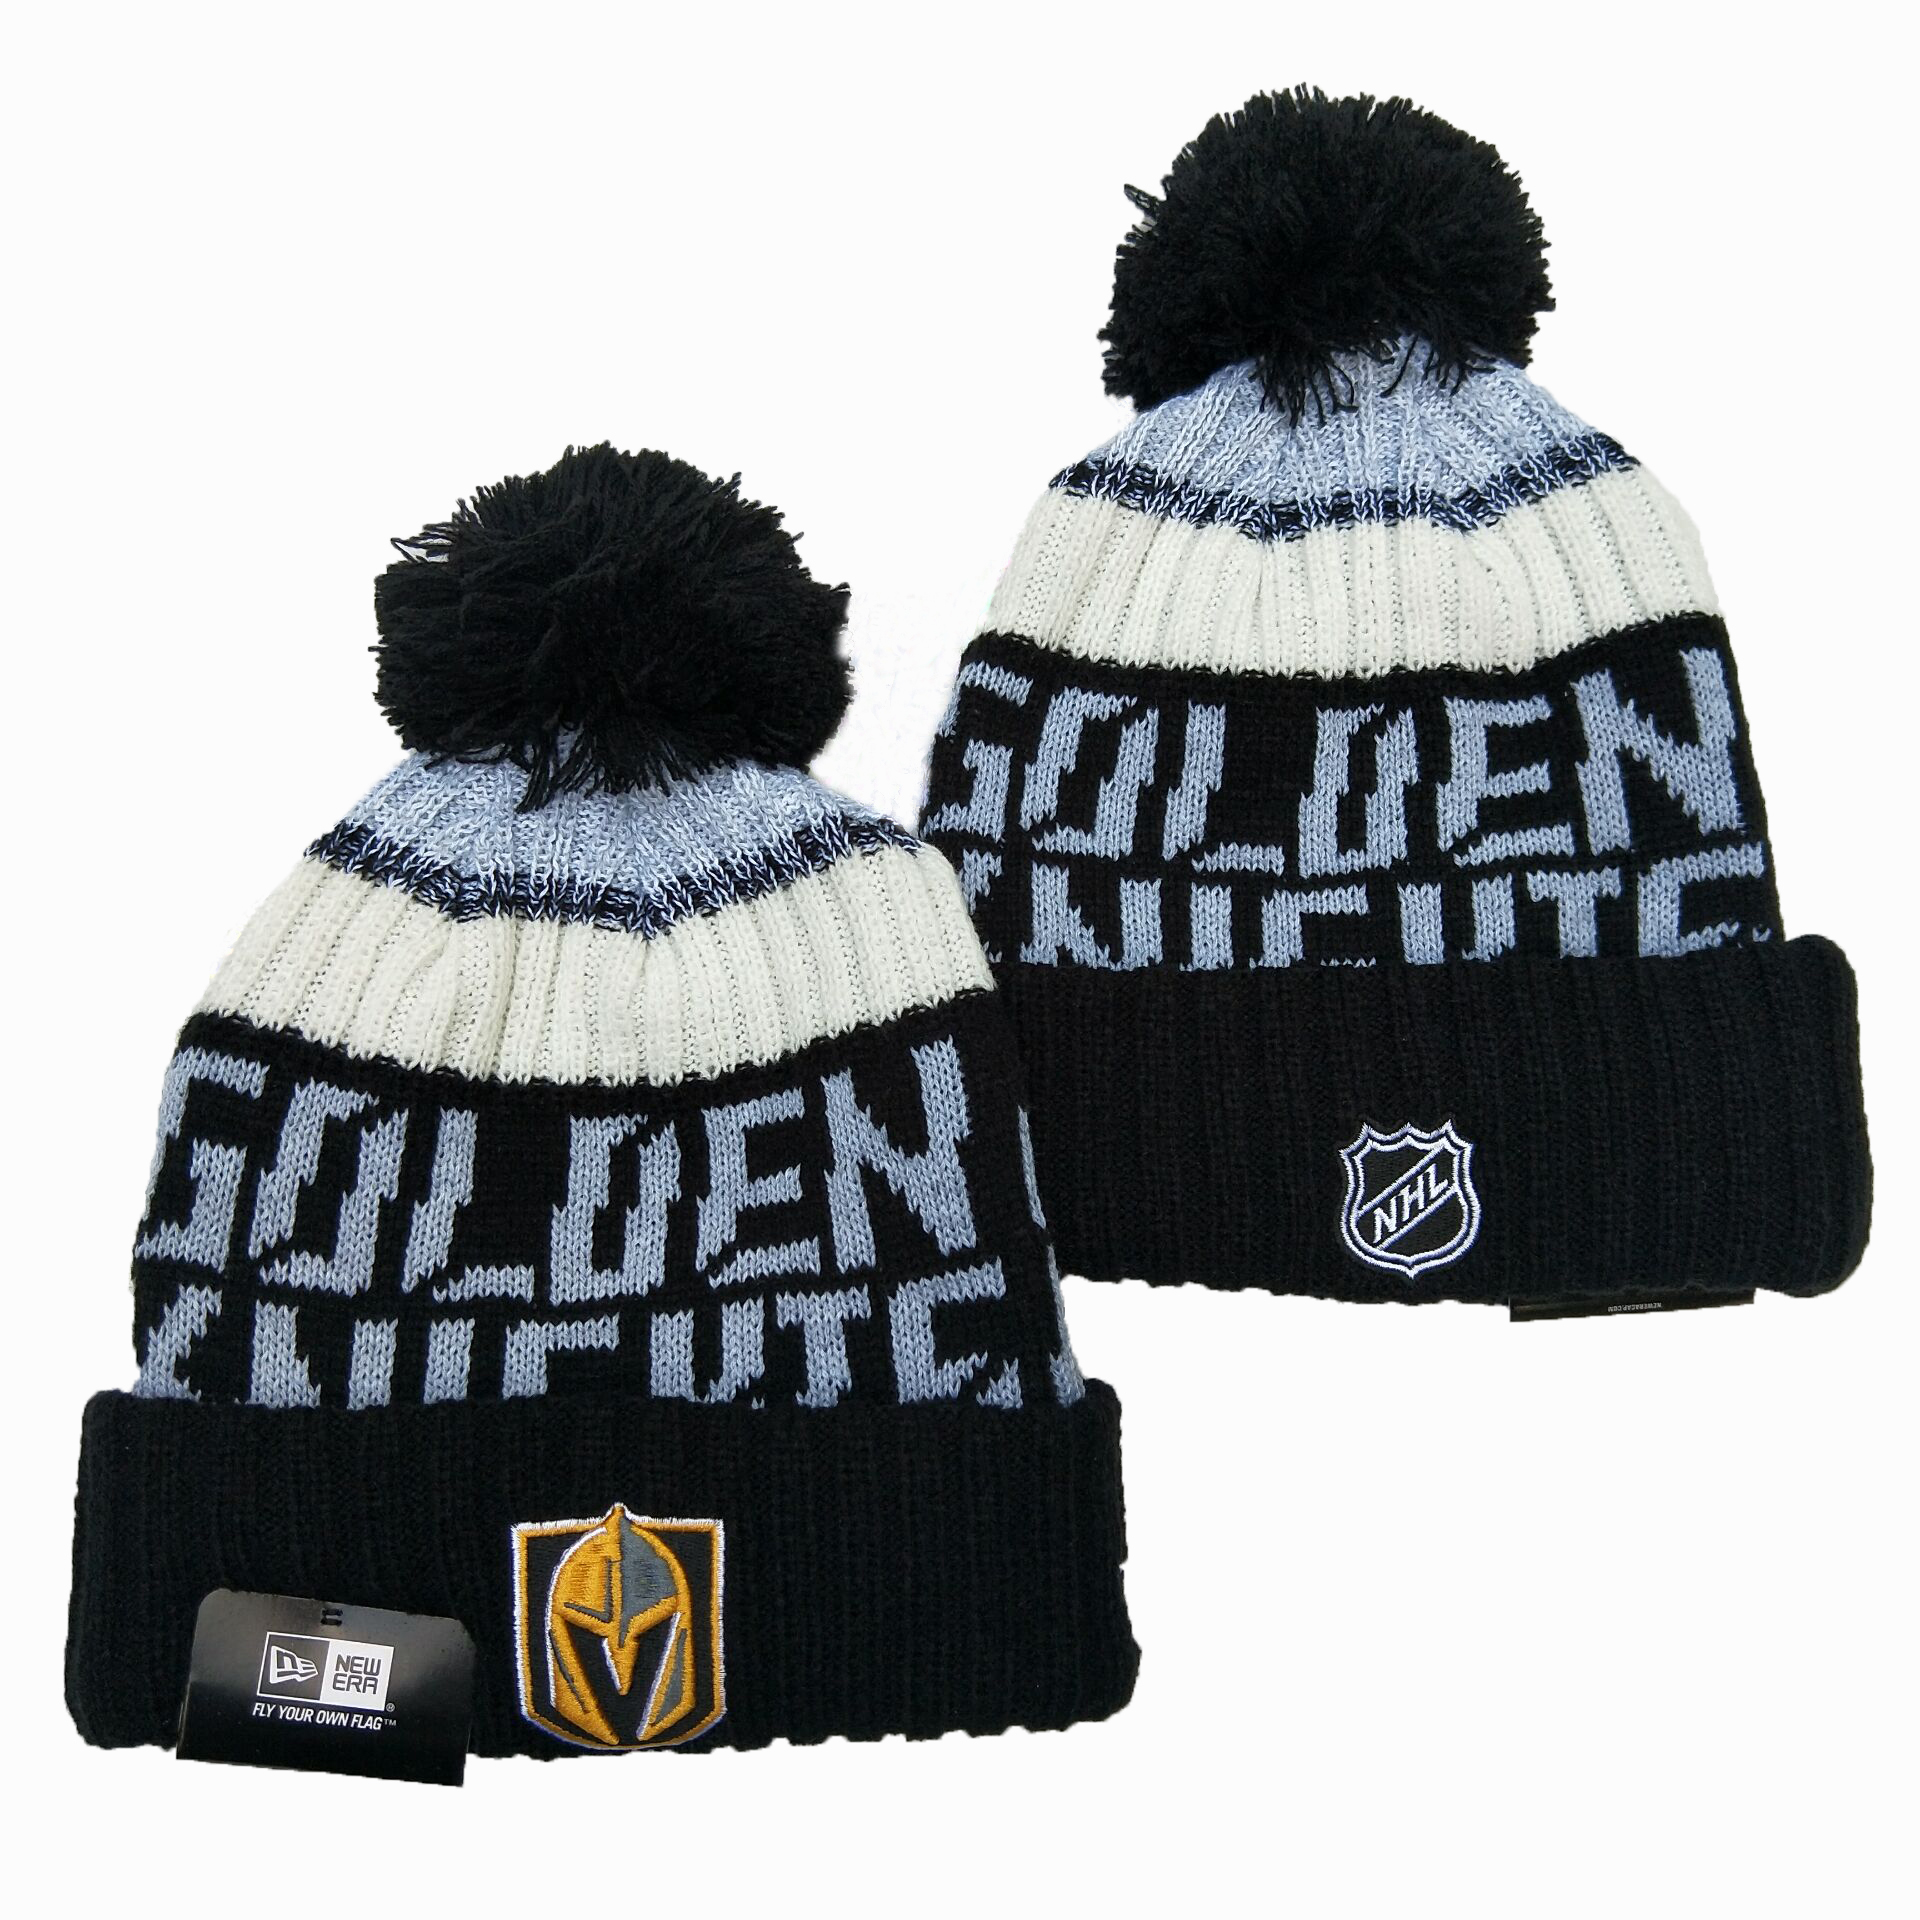 Vegas Golden Knights Knit Hats -2